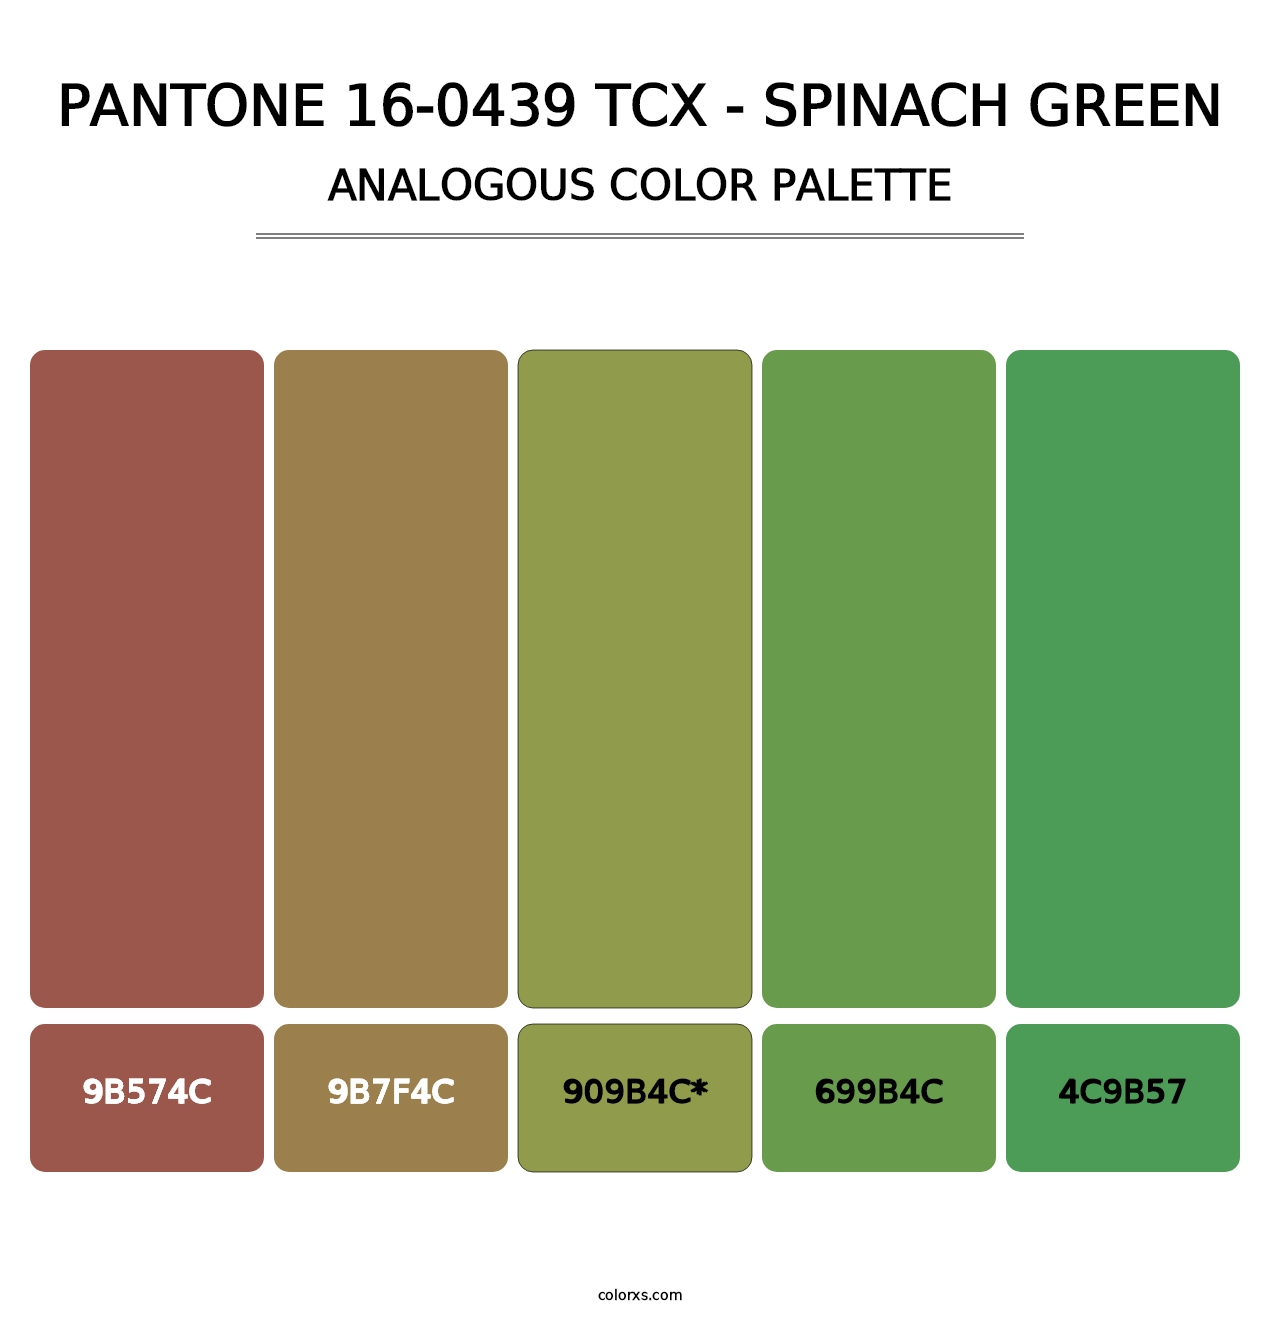 PANTONE 16-0439 TCX - Spinach Green - Analogous Color Palette